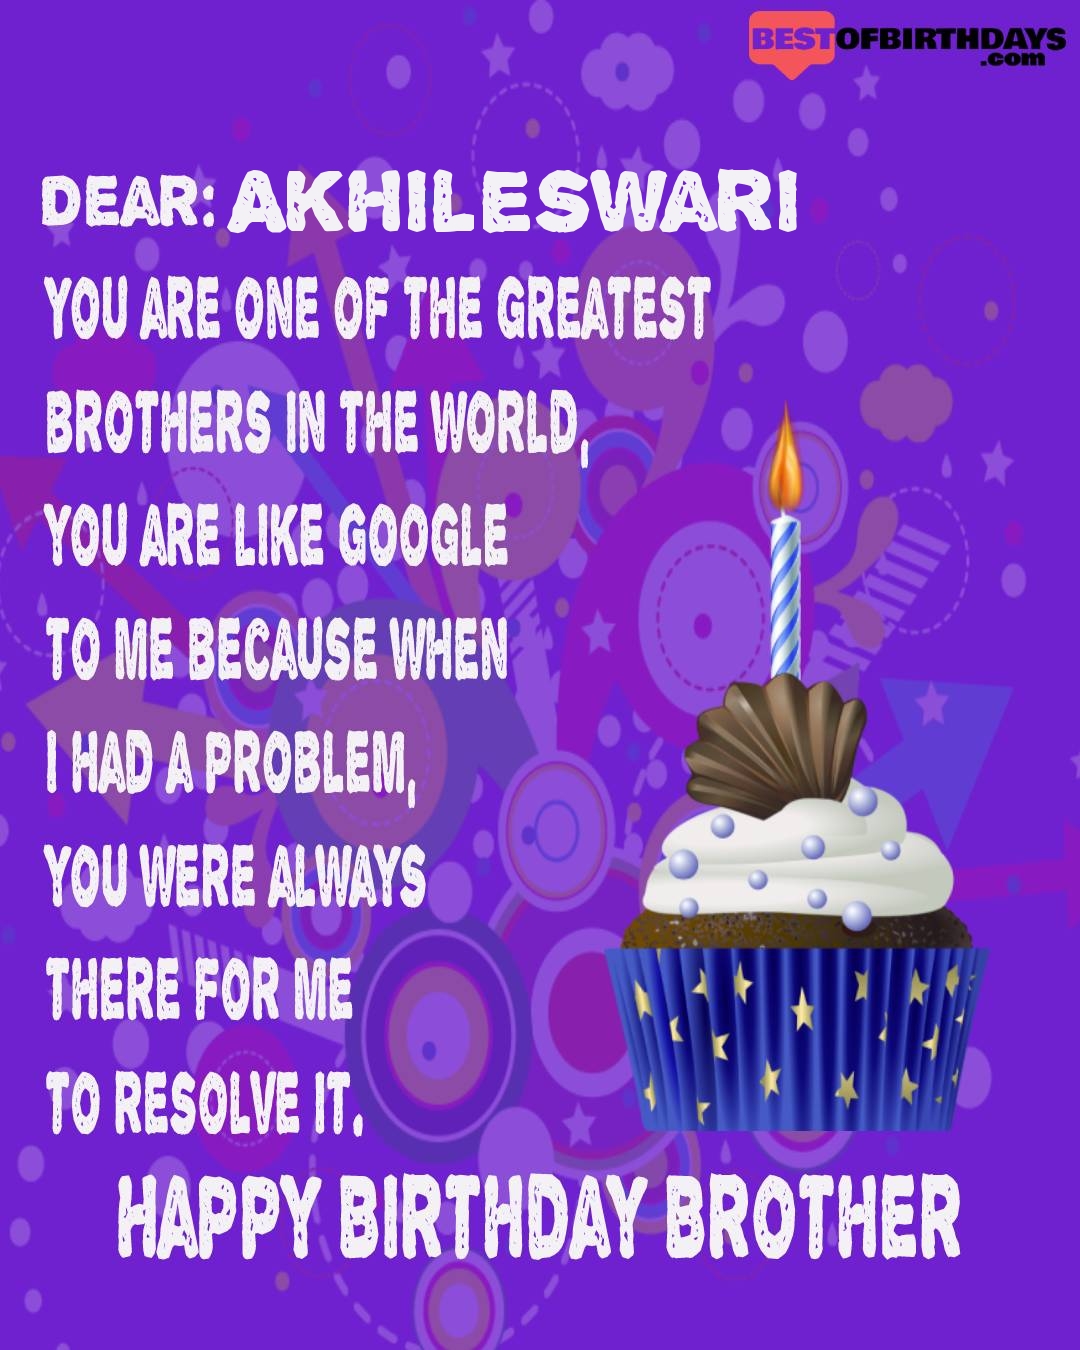 Happy birthday akhileswari bhai brother bro